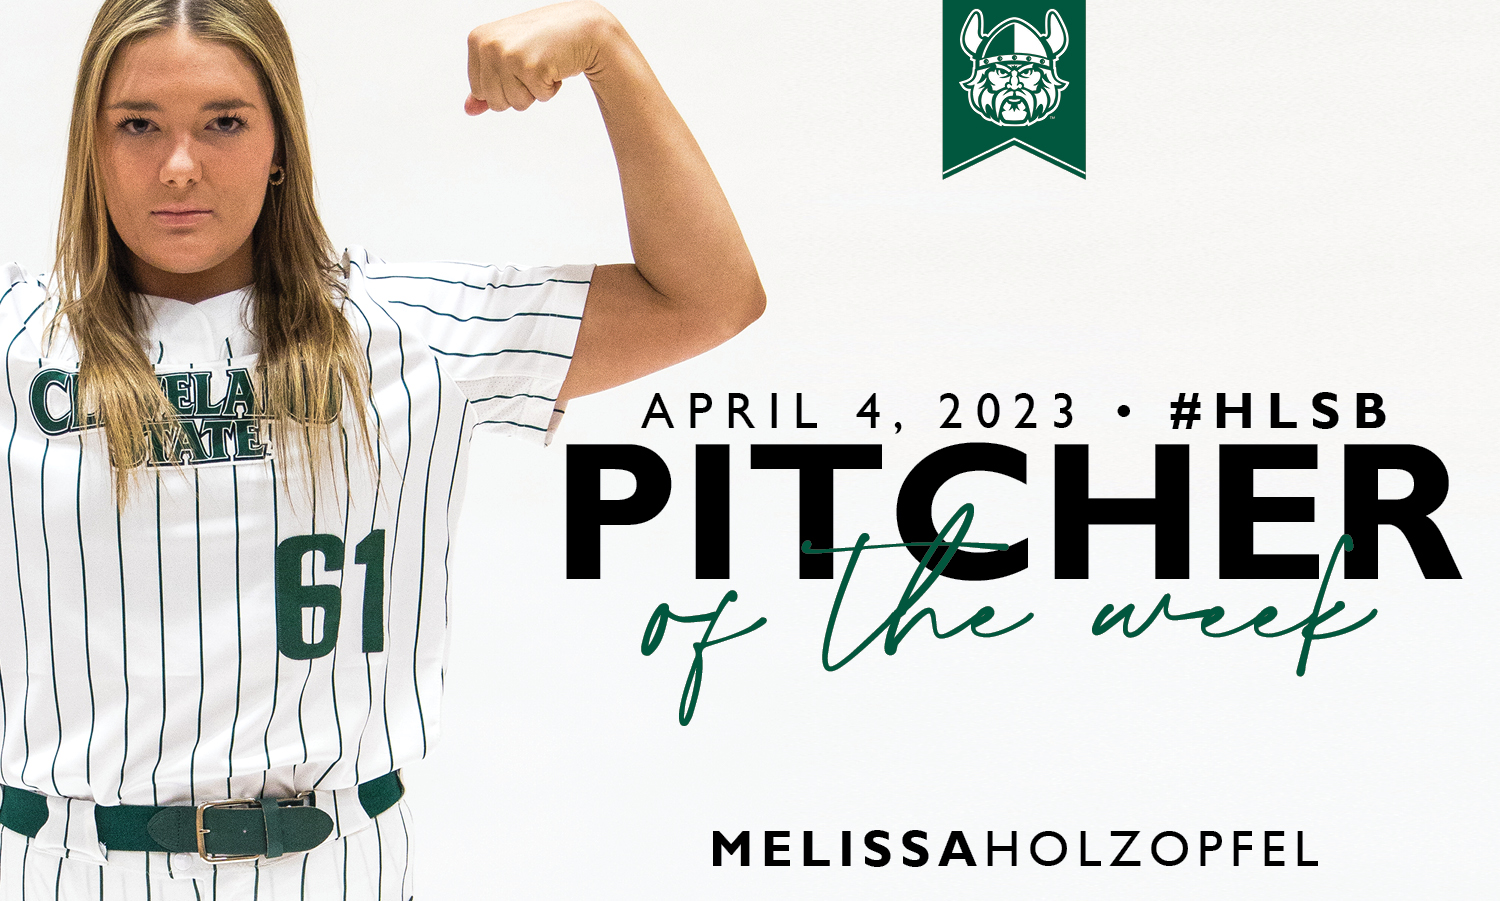 Melissa Holzopfel Named #HLSB Pitcher of the Week